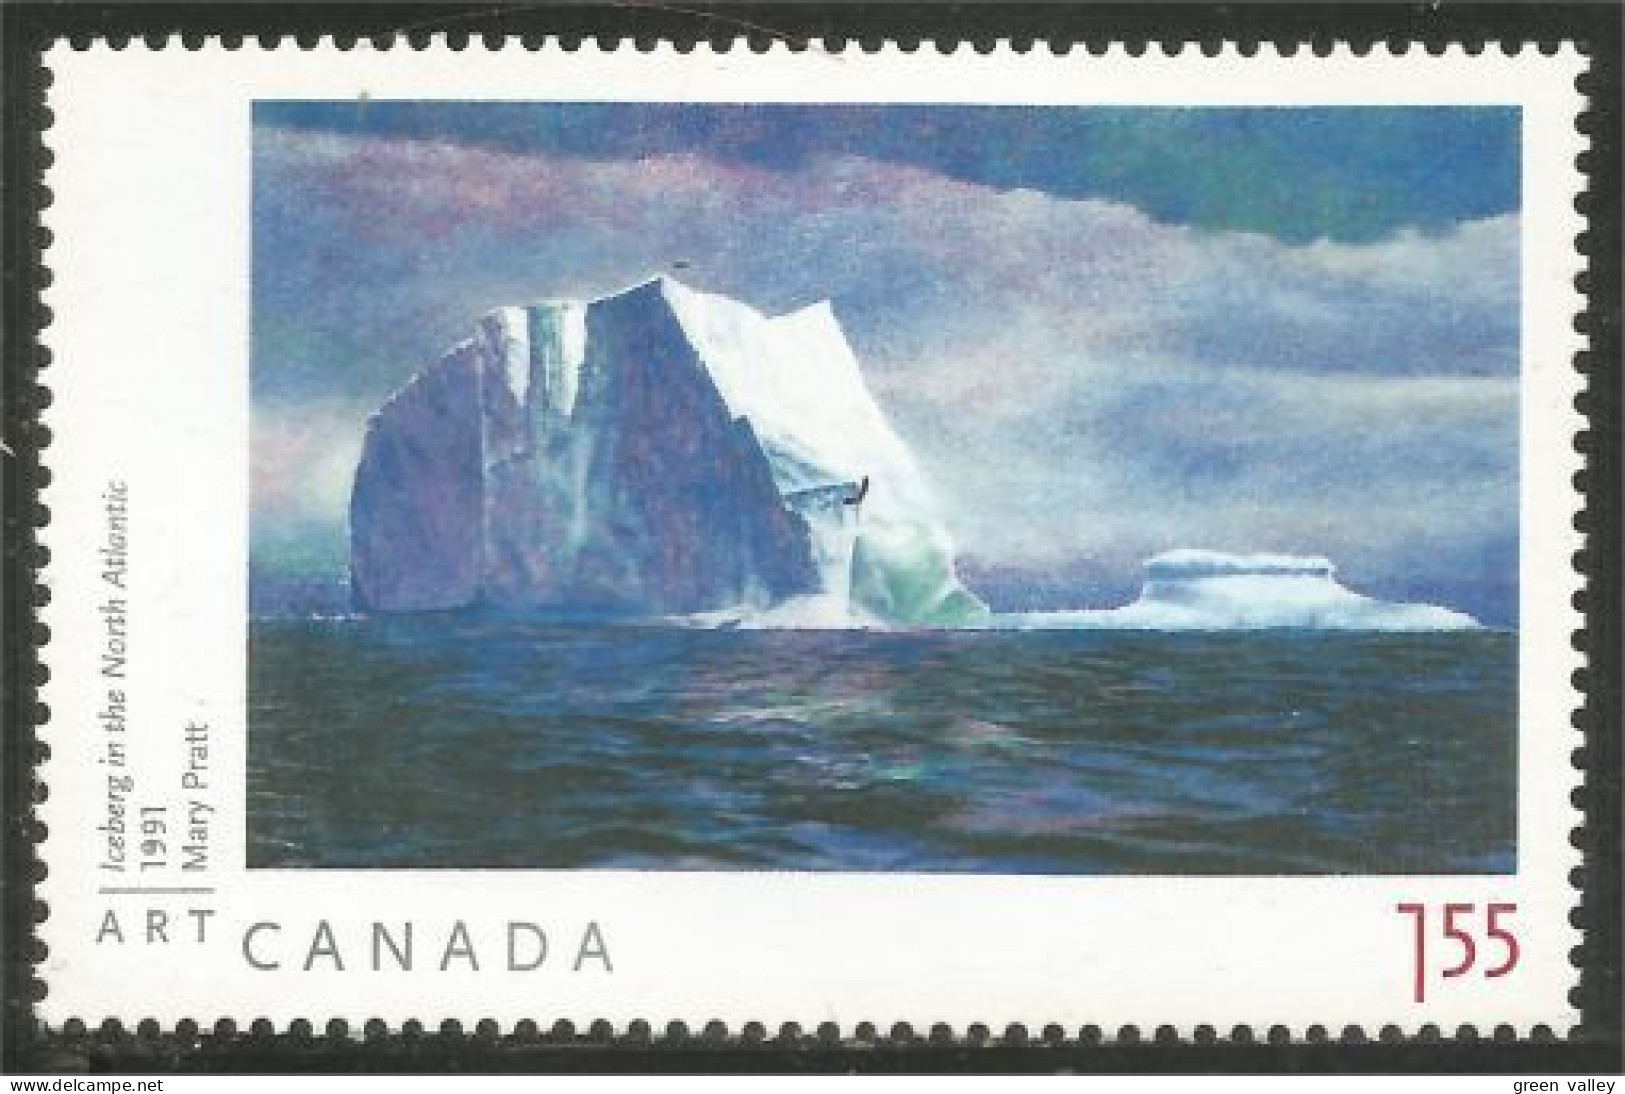 Canada Tableau Iceberg Mary Pratt Painting MNH ** Neuf SC (C22-12aa) - Neufs